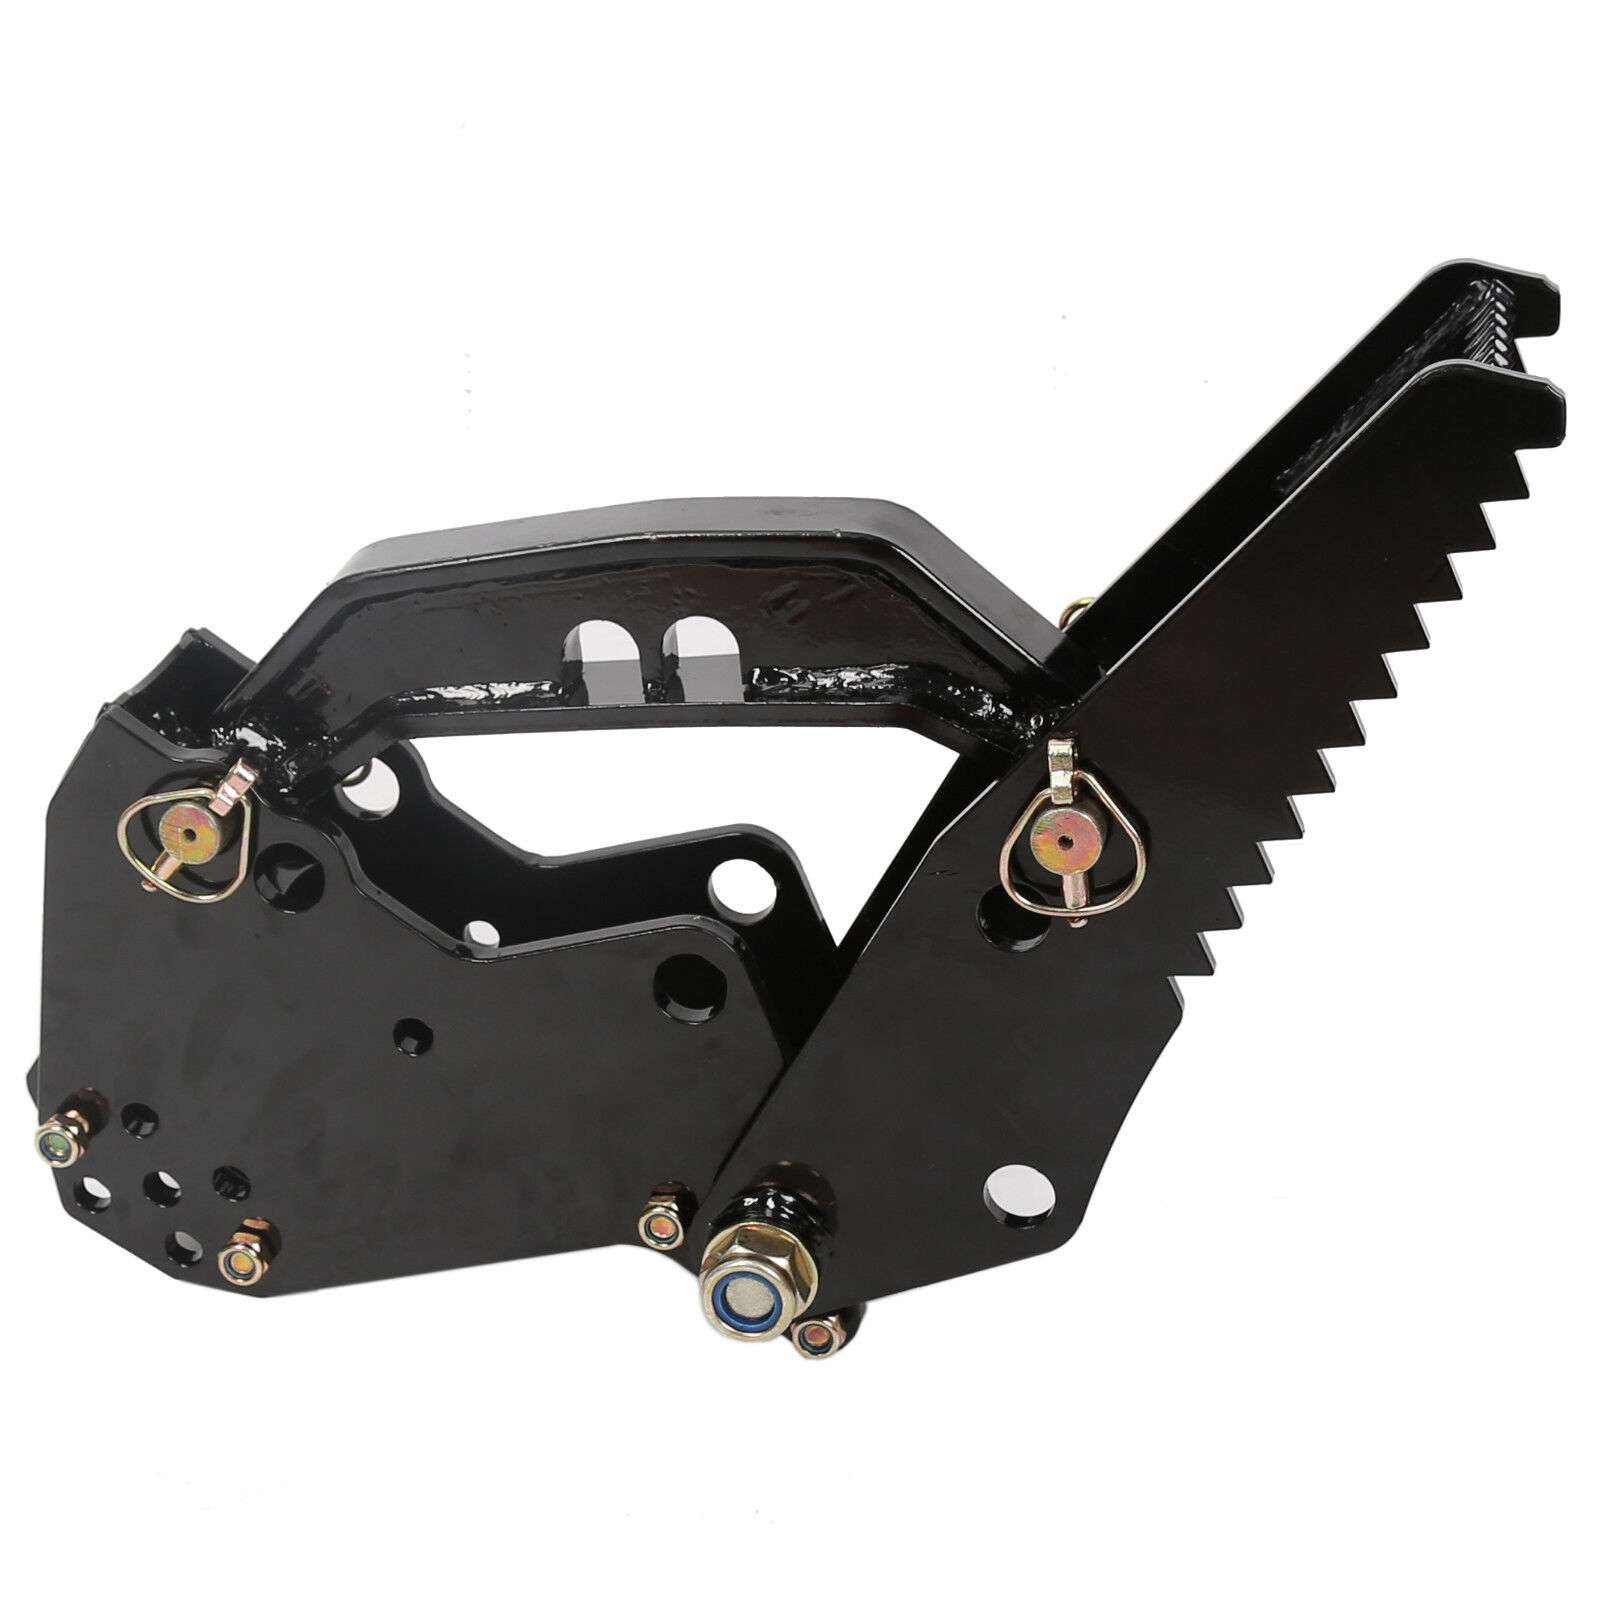 Backhoe Thumb Excavator Bolt On Universal Claw Tractor Attachment Kubota Deere Unbranded EB14851780 - фотография #8